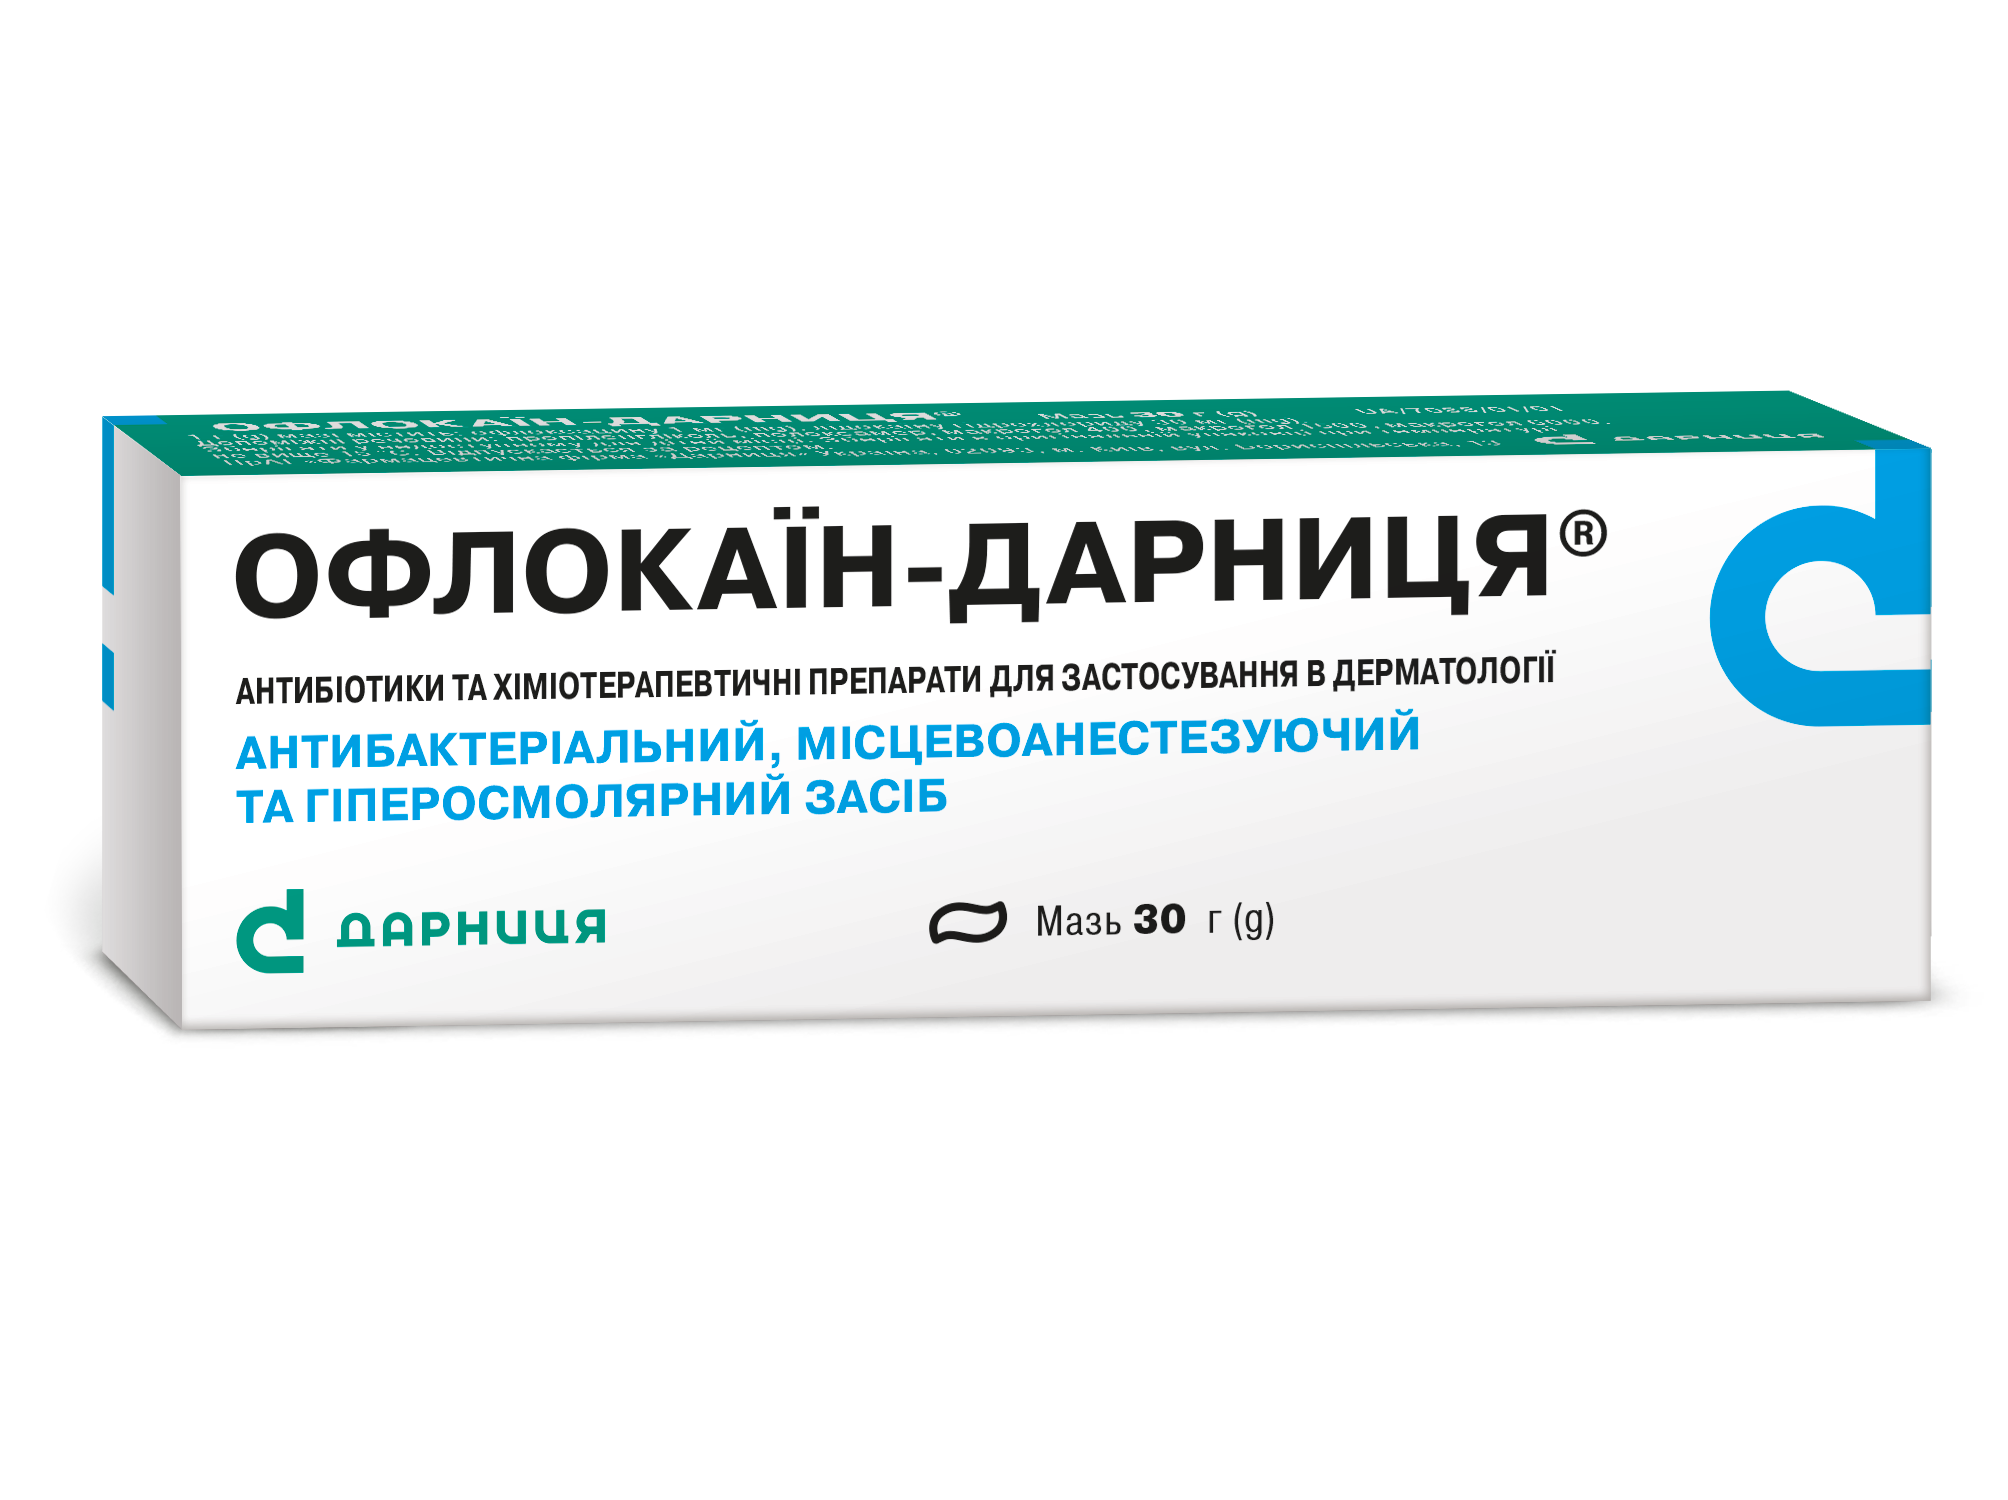 Офлокаїн - Дарниця®